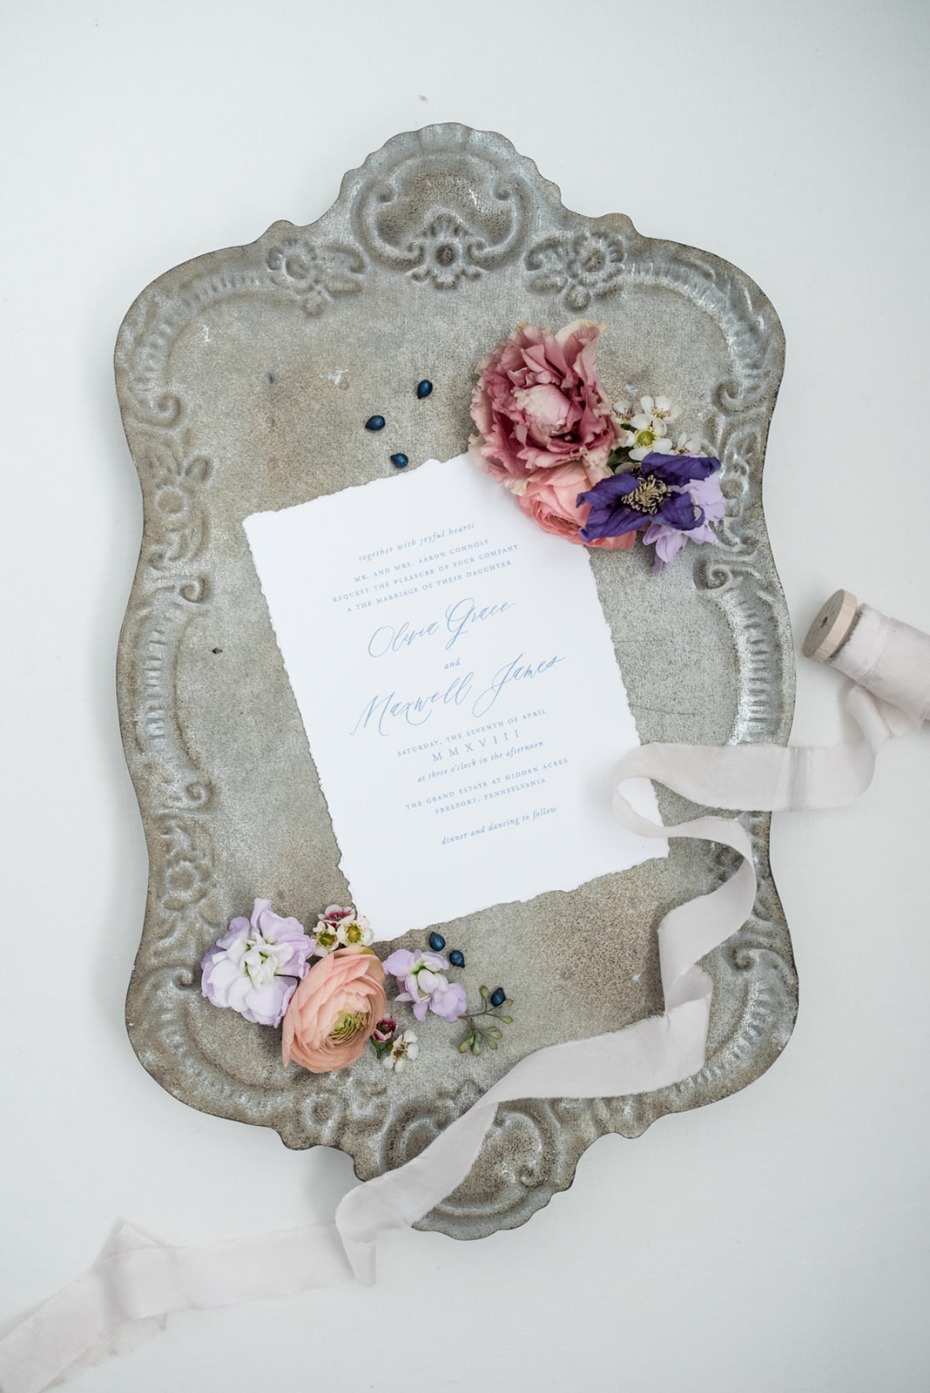 Pretty wedding invitation